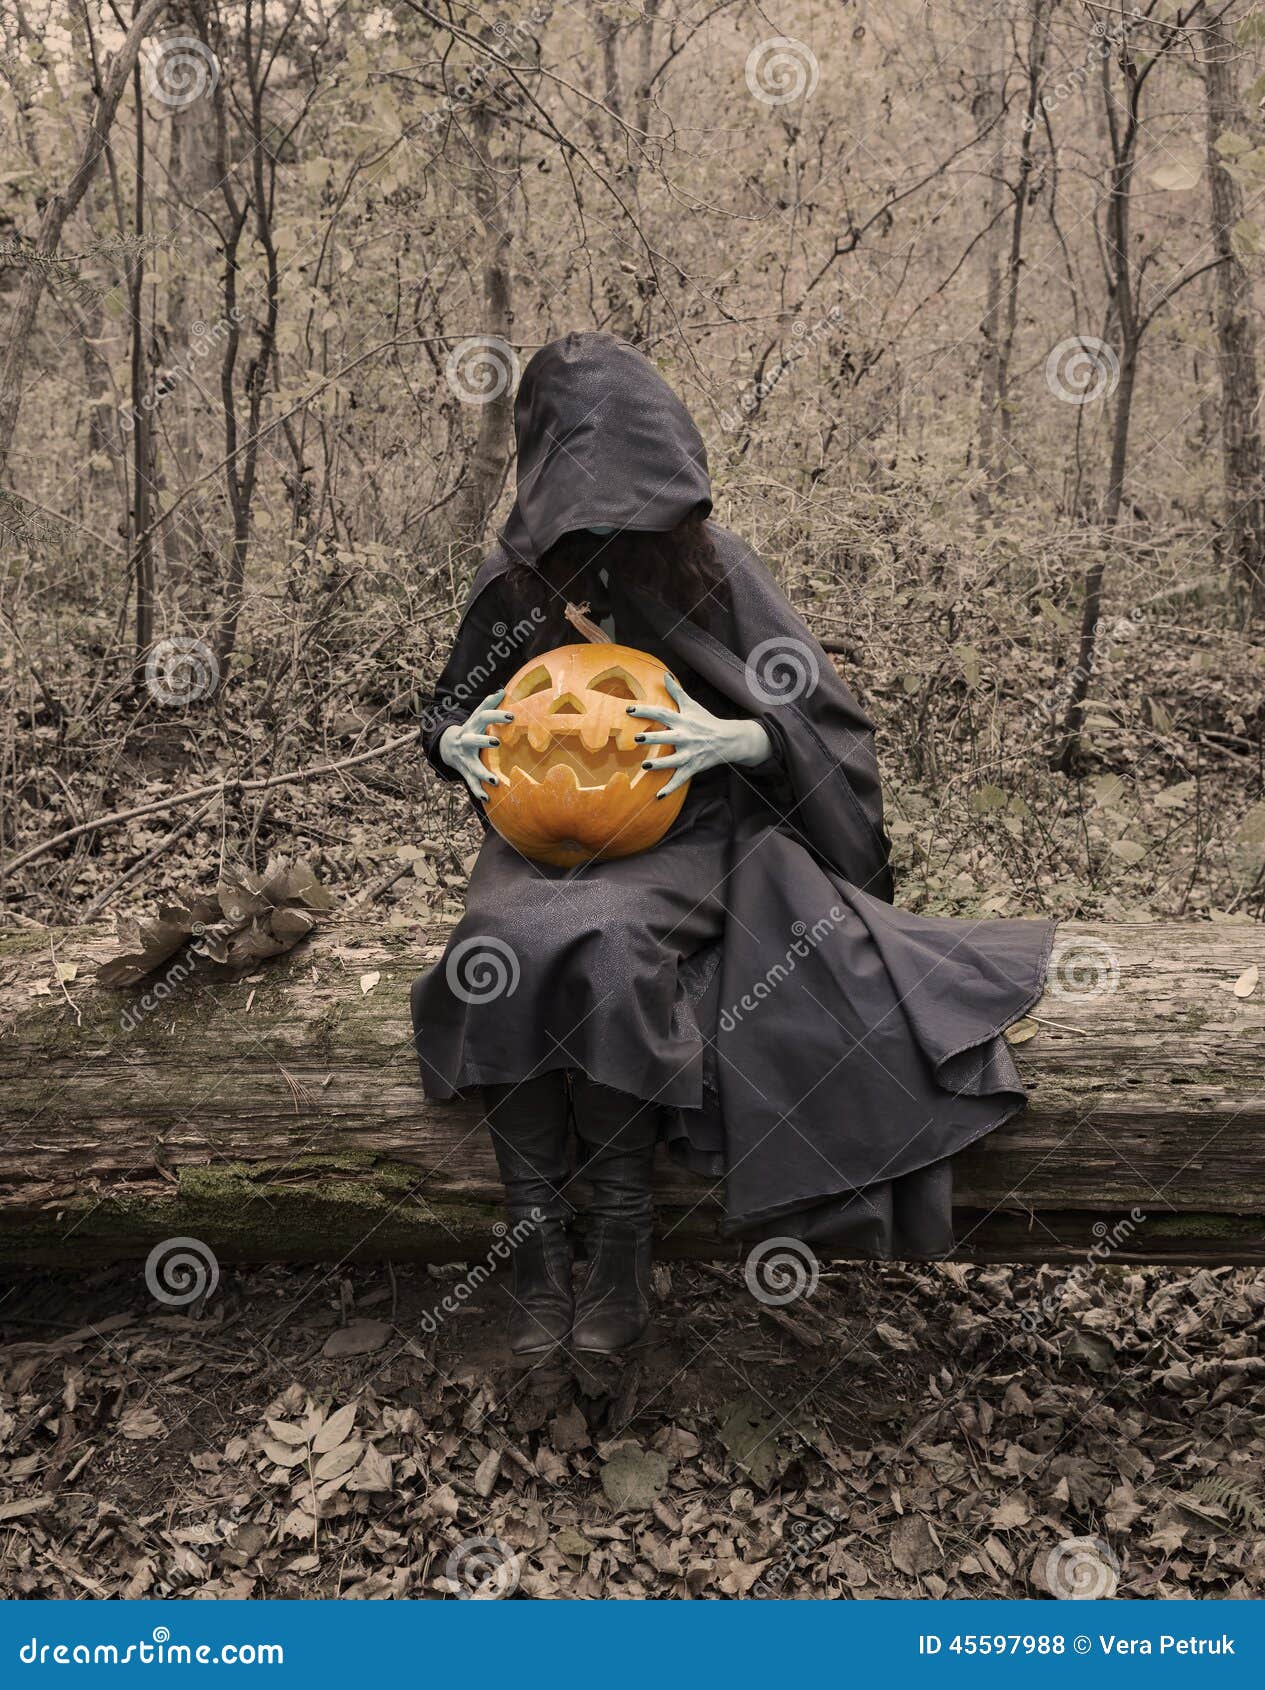 scary-witch-log-pumpkin-halloween-background-black-mantle-sitting-old-forest-45597988.jpg